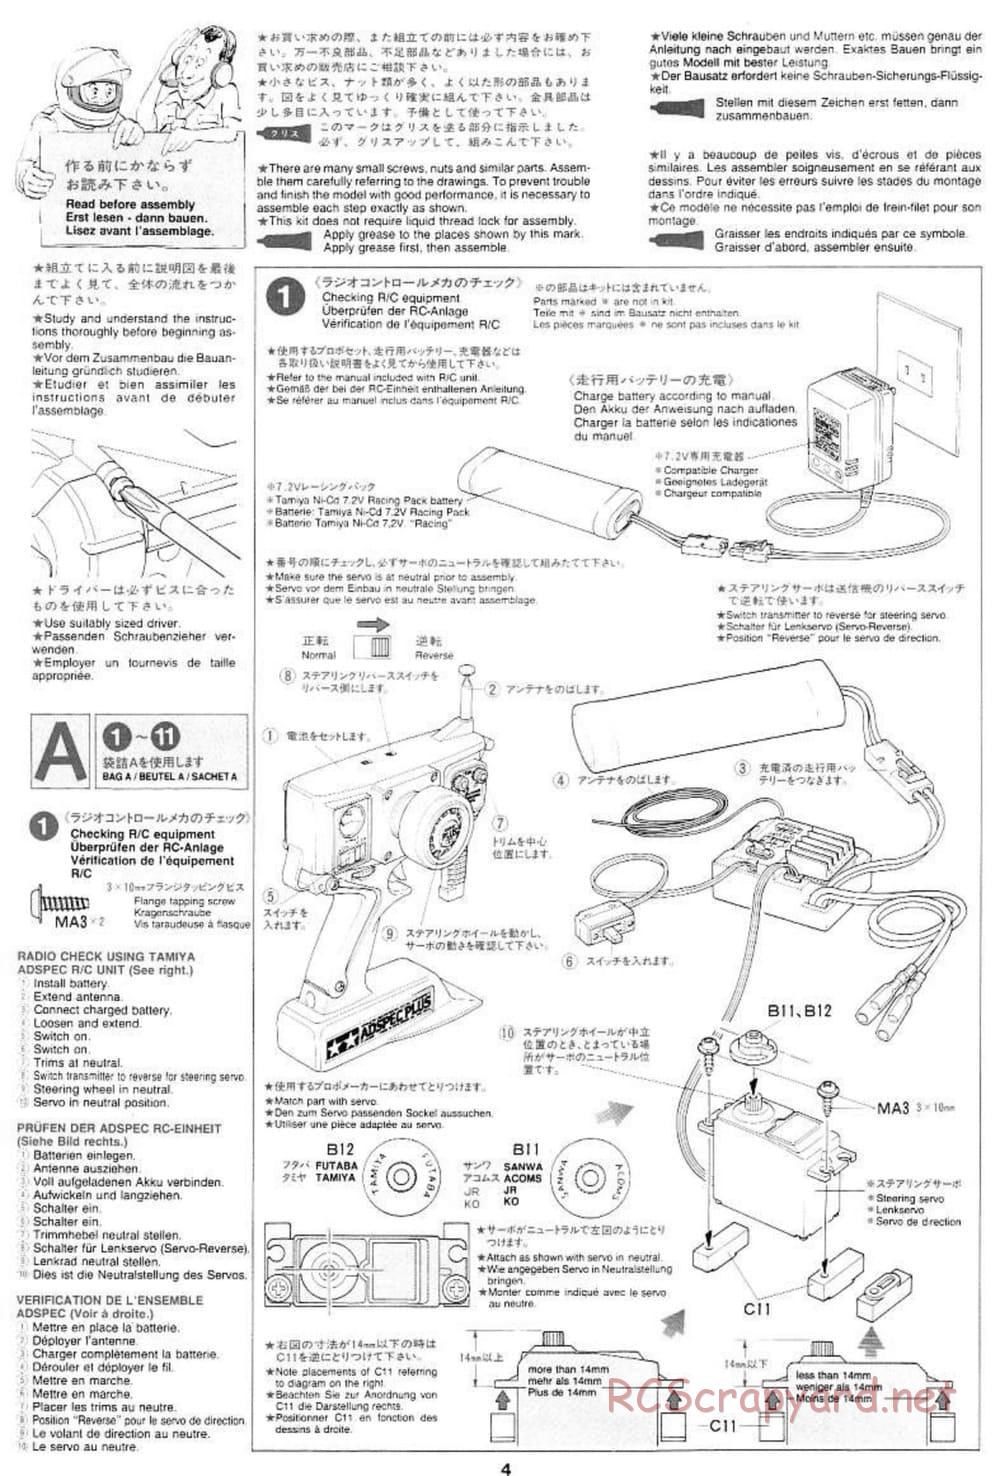 Tamiya - Castrol Mugen NSX - TL-01 Chassis - Manual - Page 4